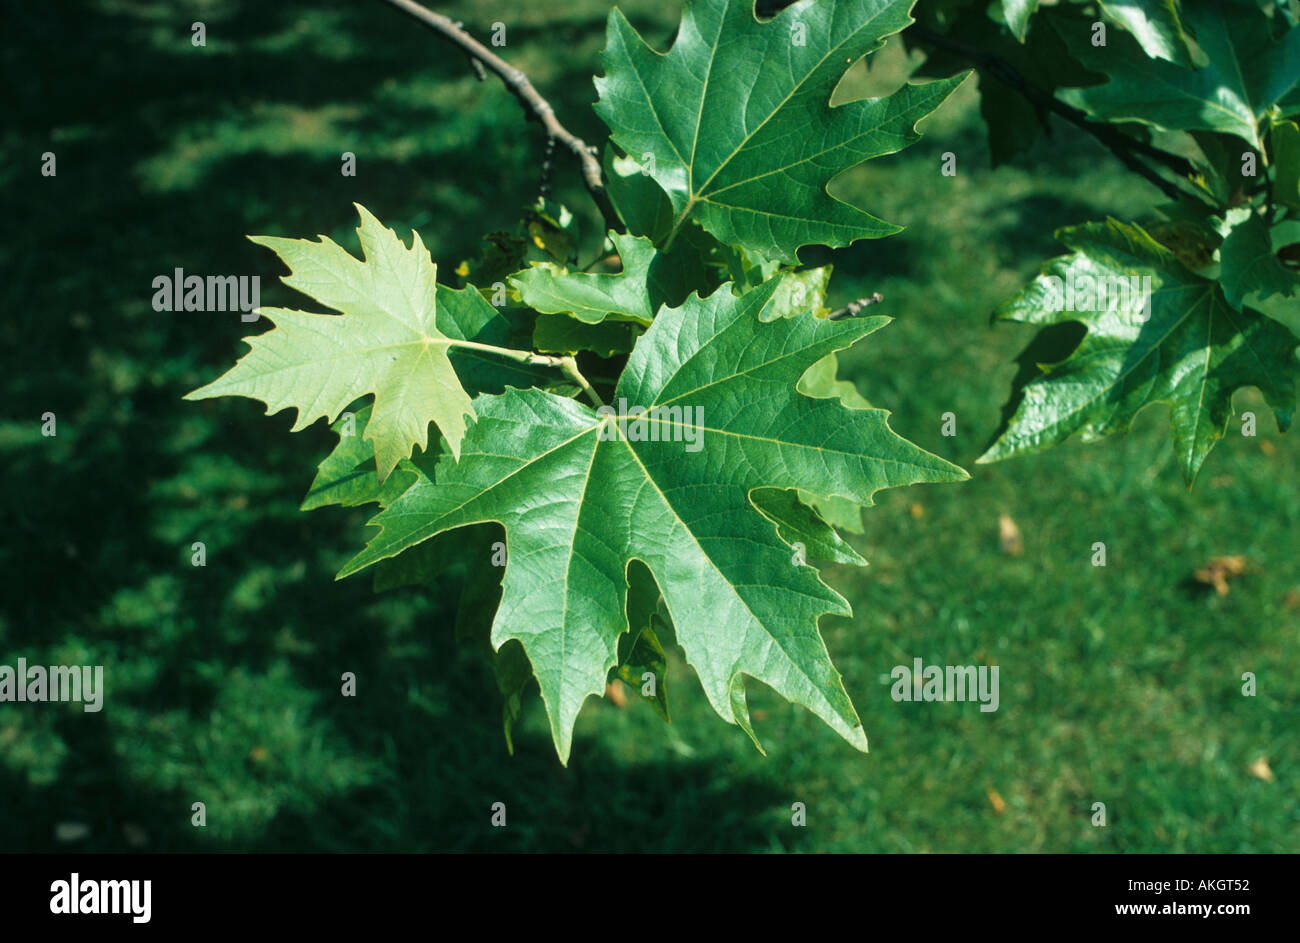 Plano de árbol Londres Platanus hispanica cerca de hojas en la rama Foto de stock